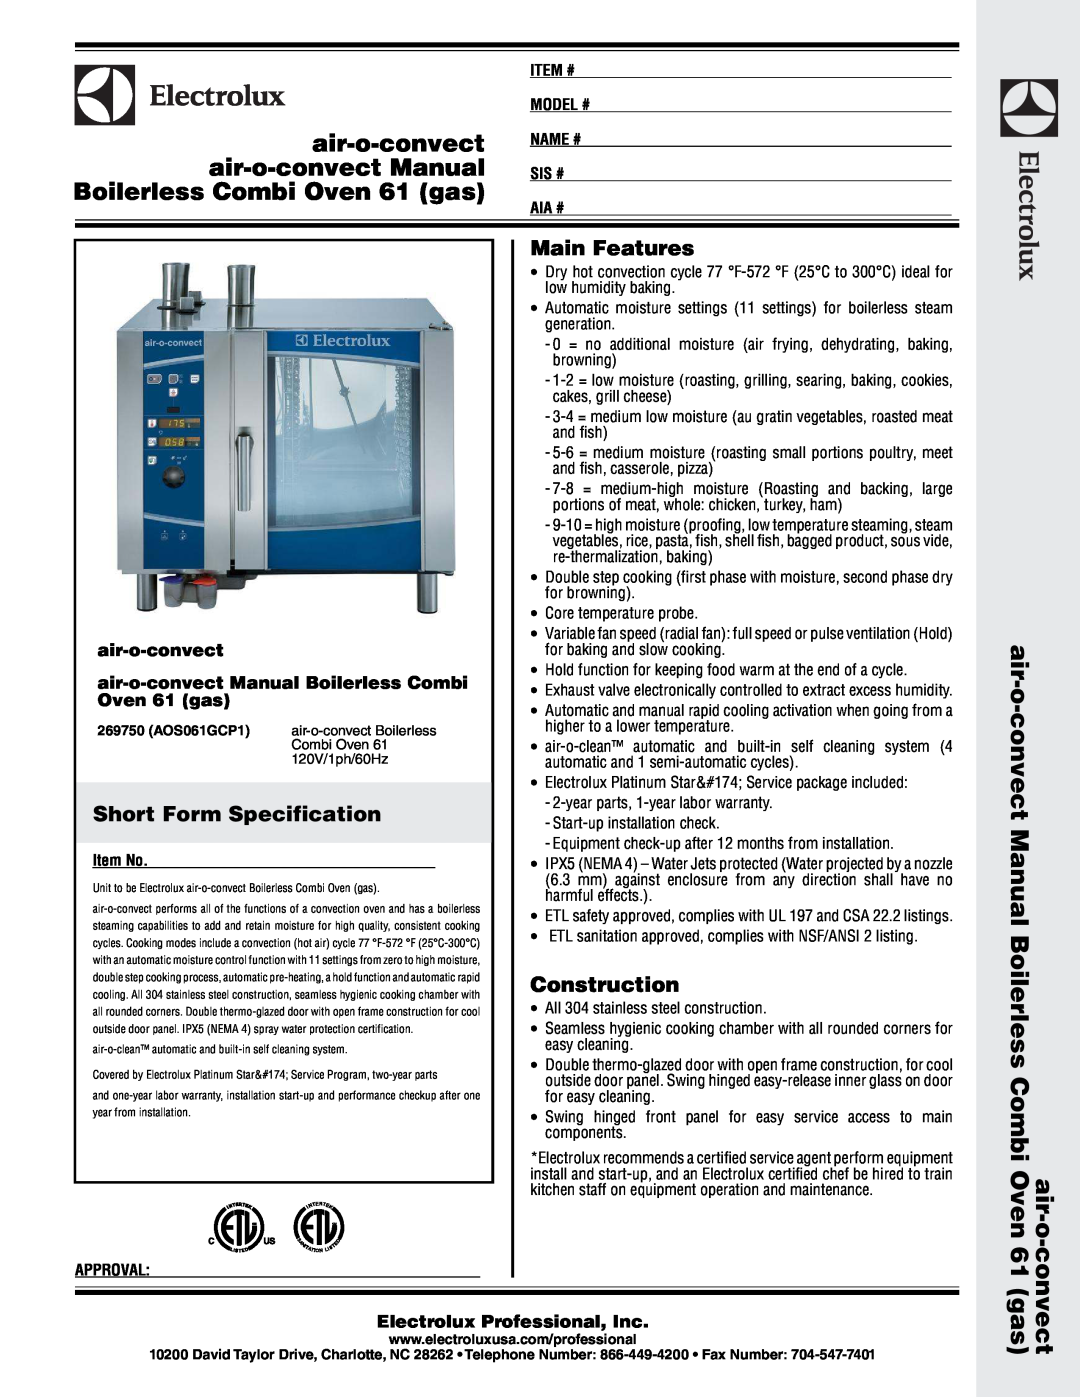 Electrolux 269750 warranty air-o-convect Manual Boilerless Combi Oven, Boilerless Combi Oven 61 gas, Main Features 